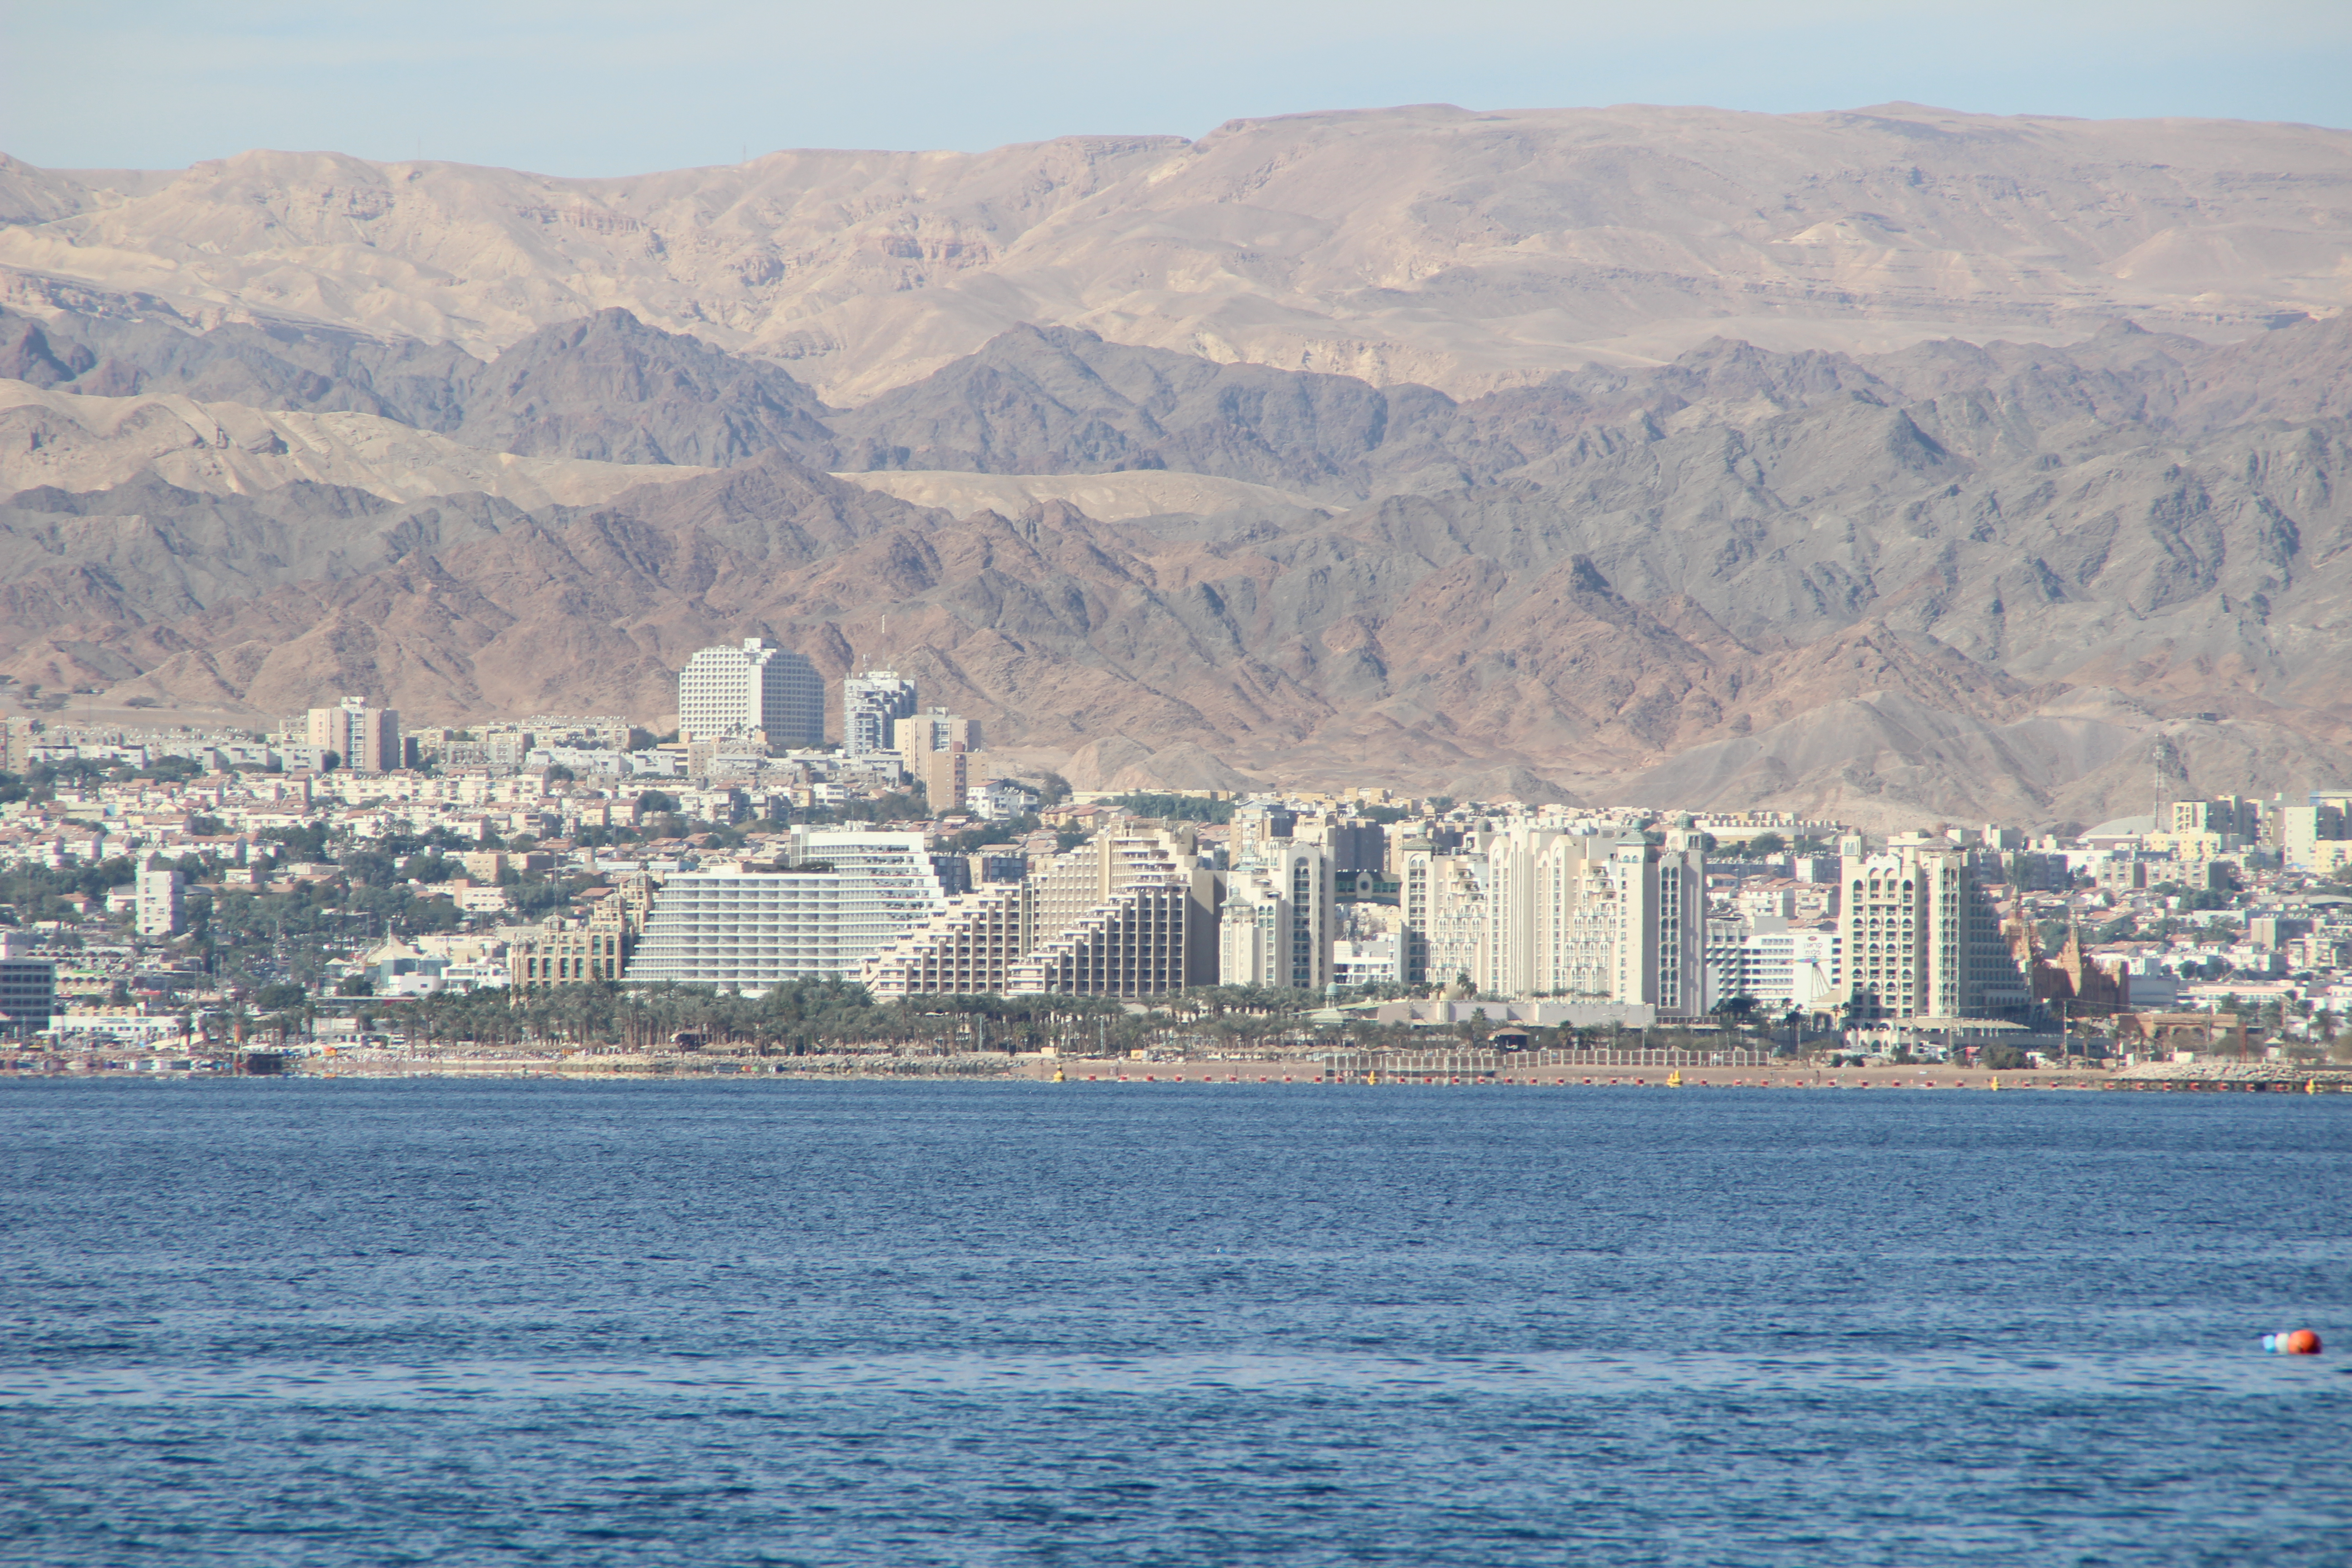 The Israeli city of Eilat